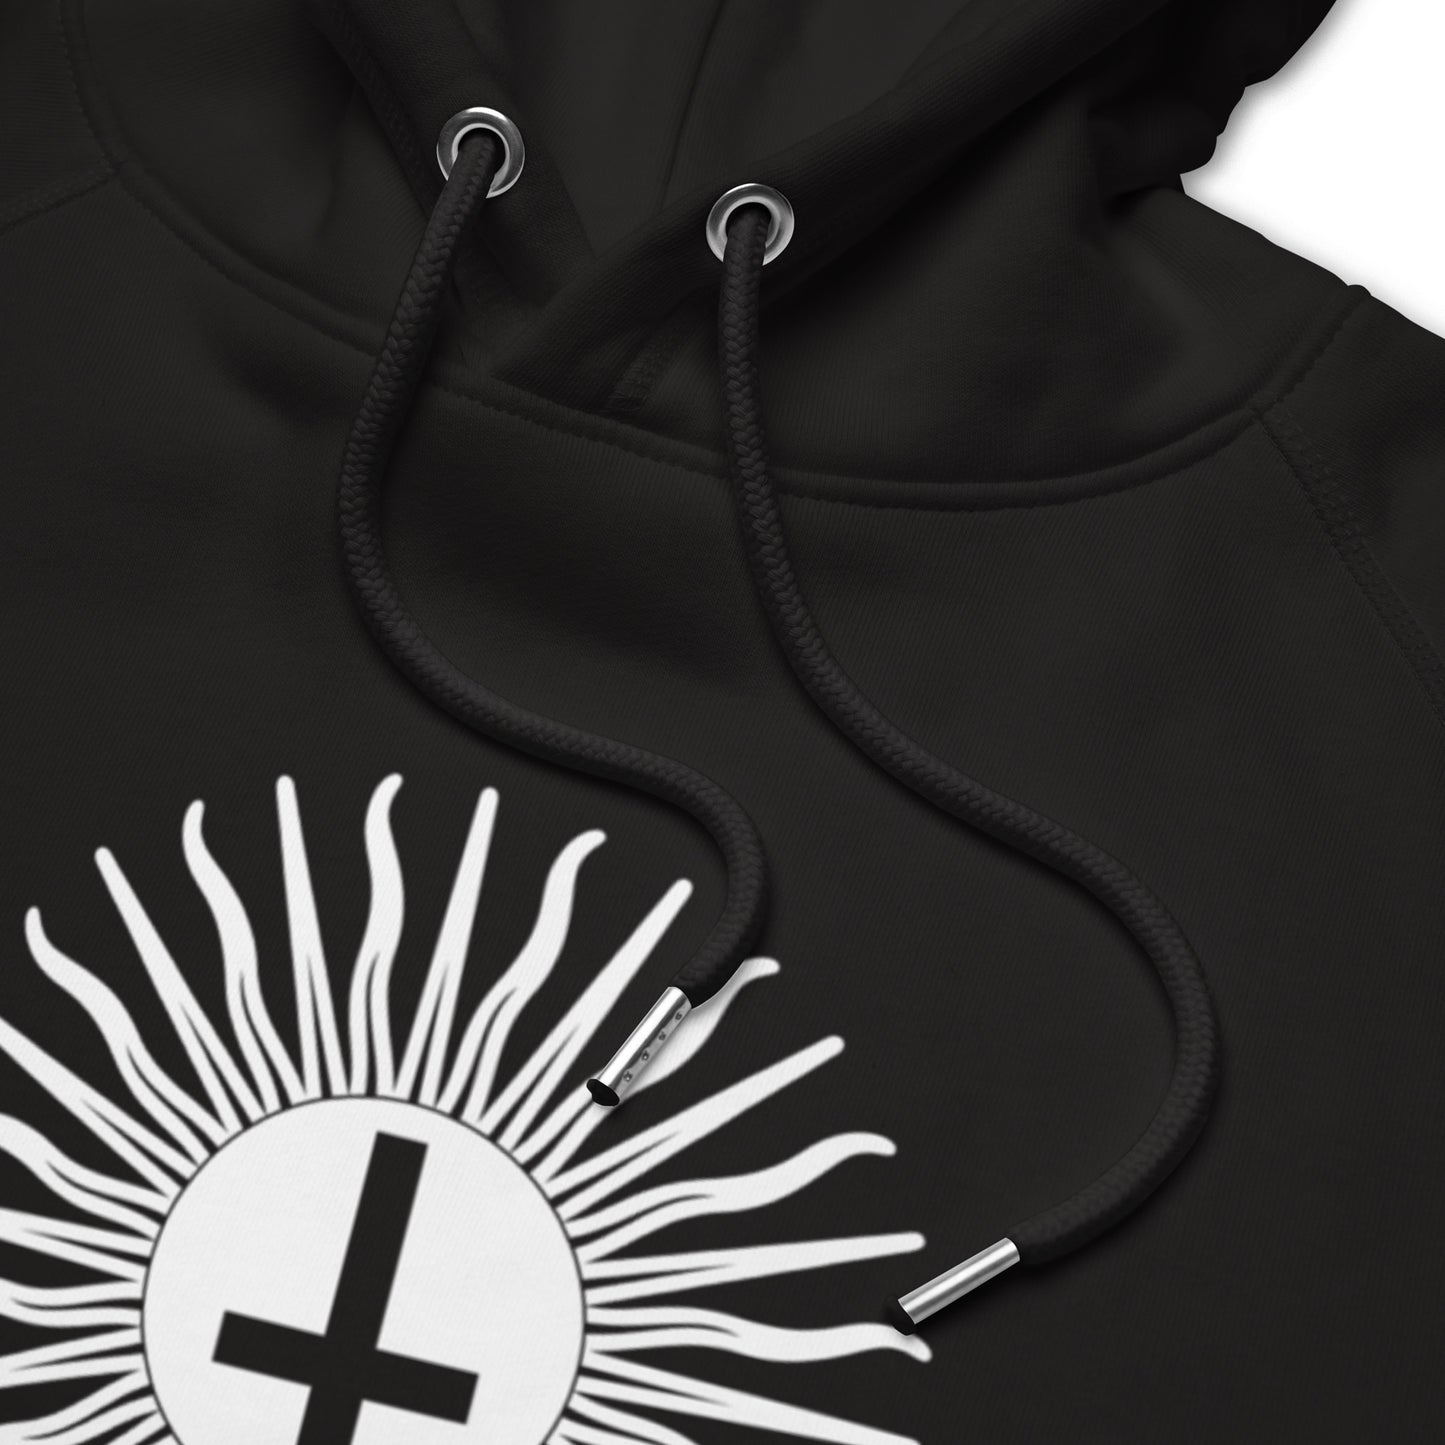 Necro Christos Unisex pullover hoodie